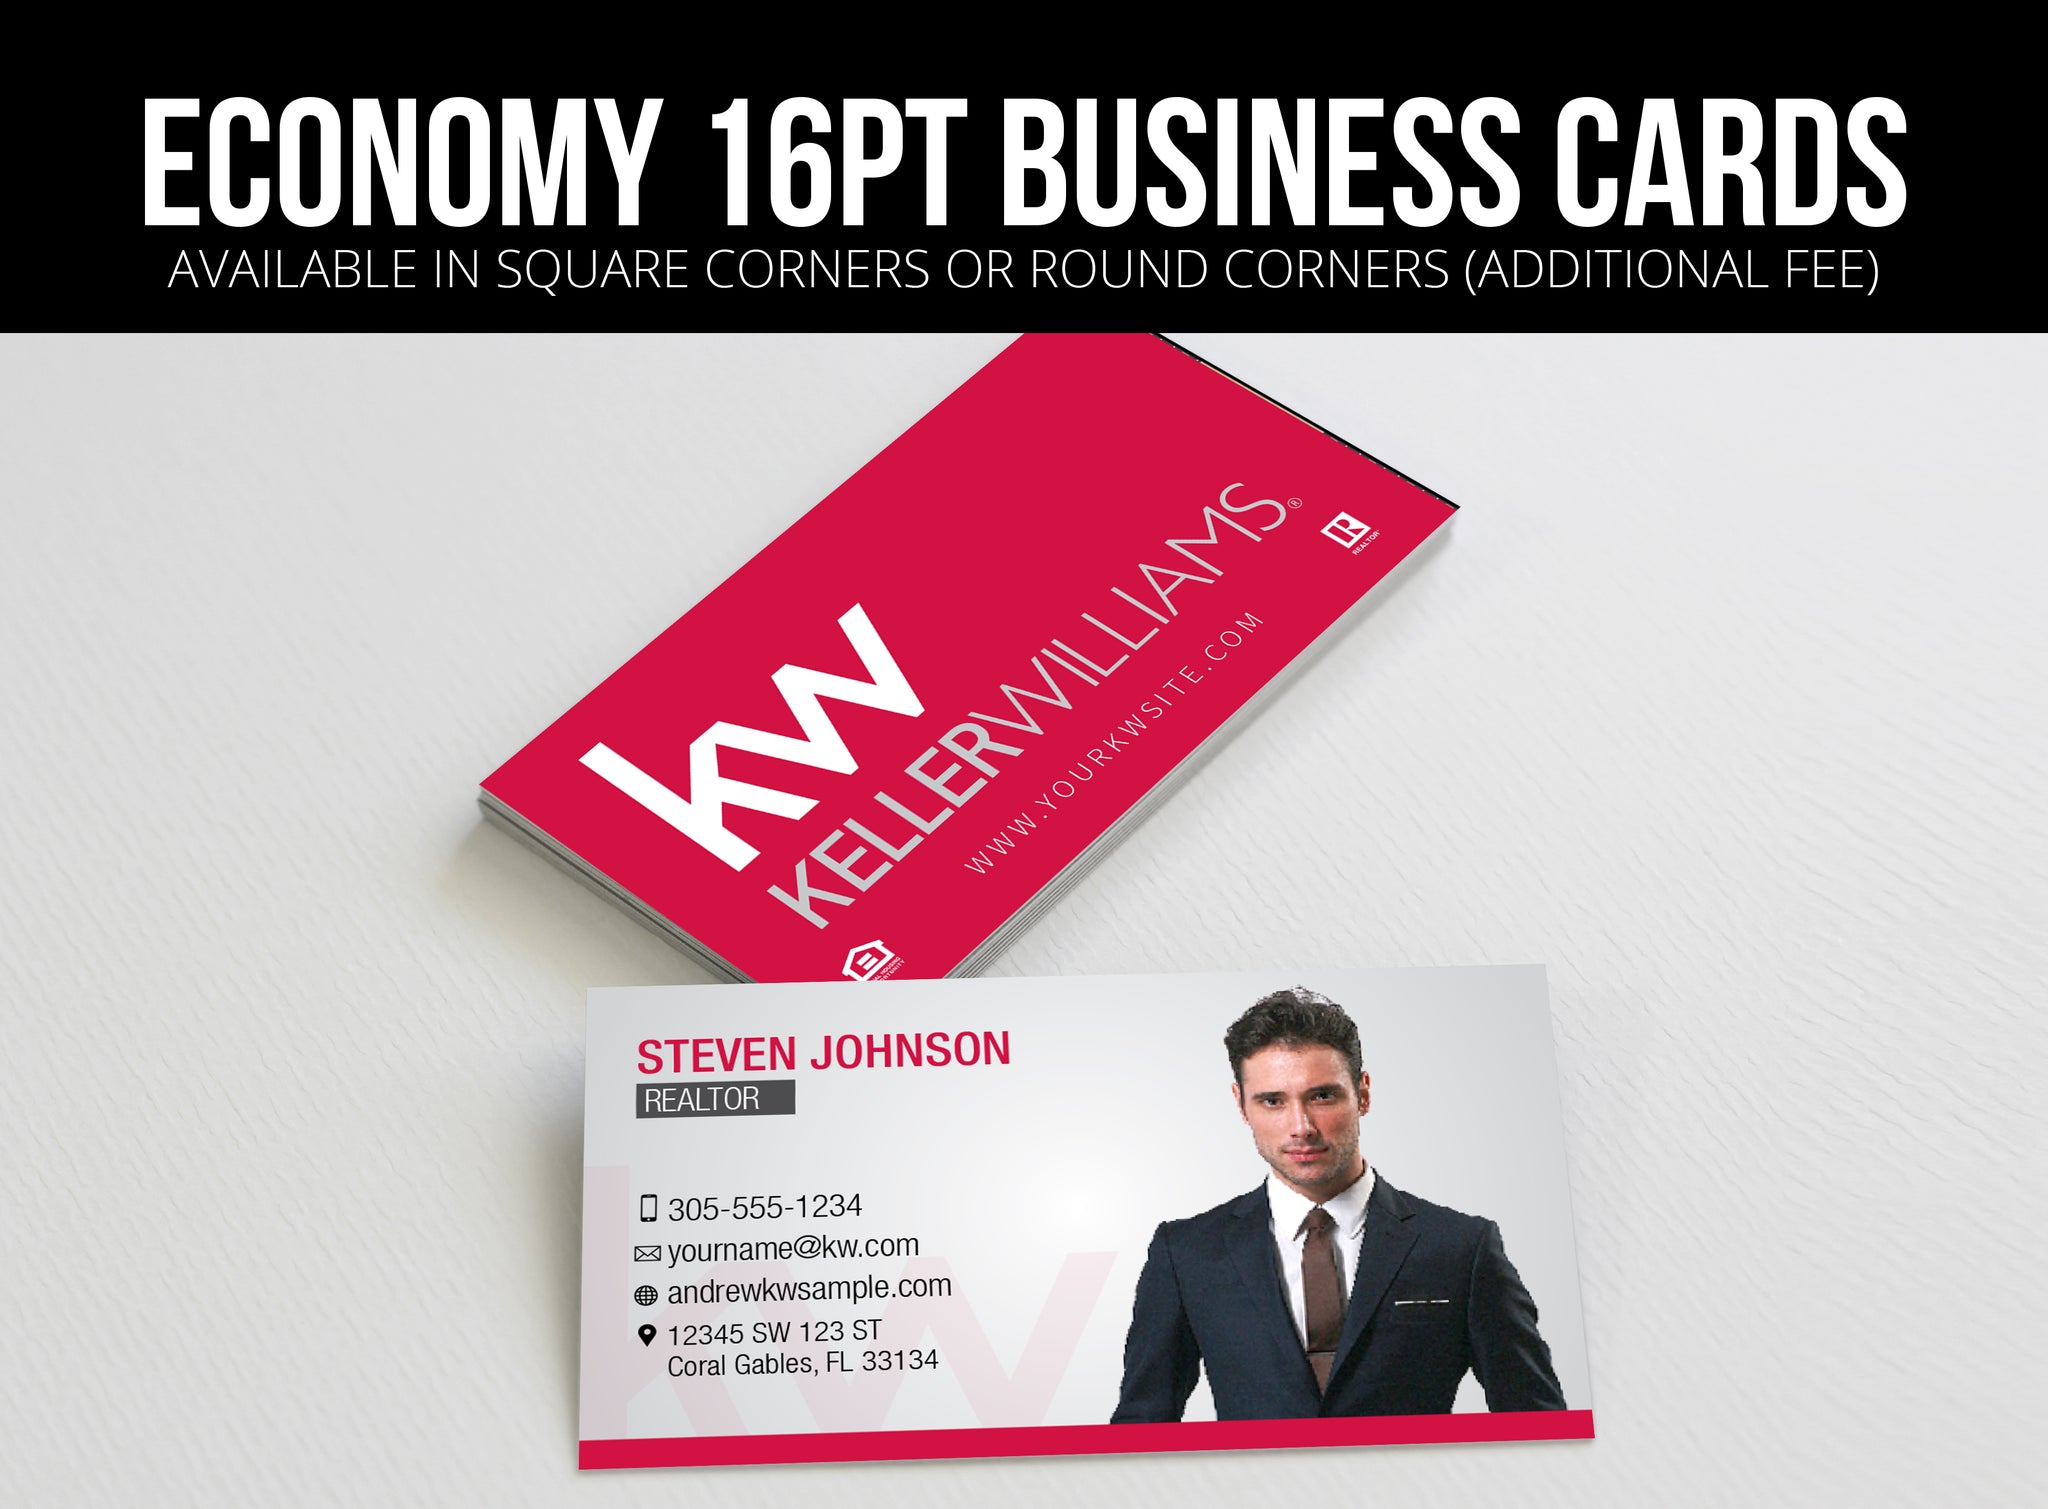 Keller Williams Business Cards: 16pt Economy